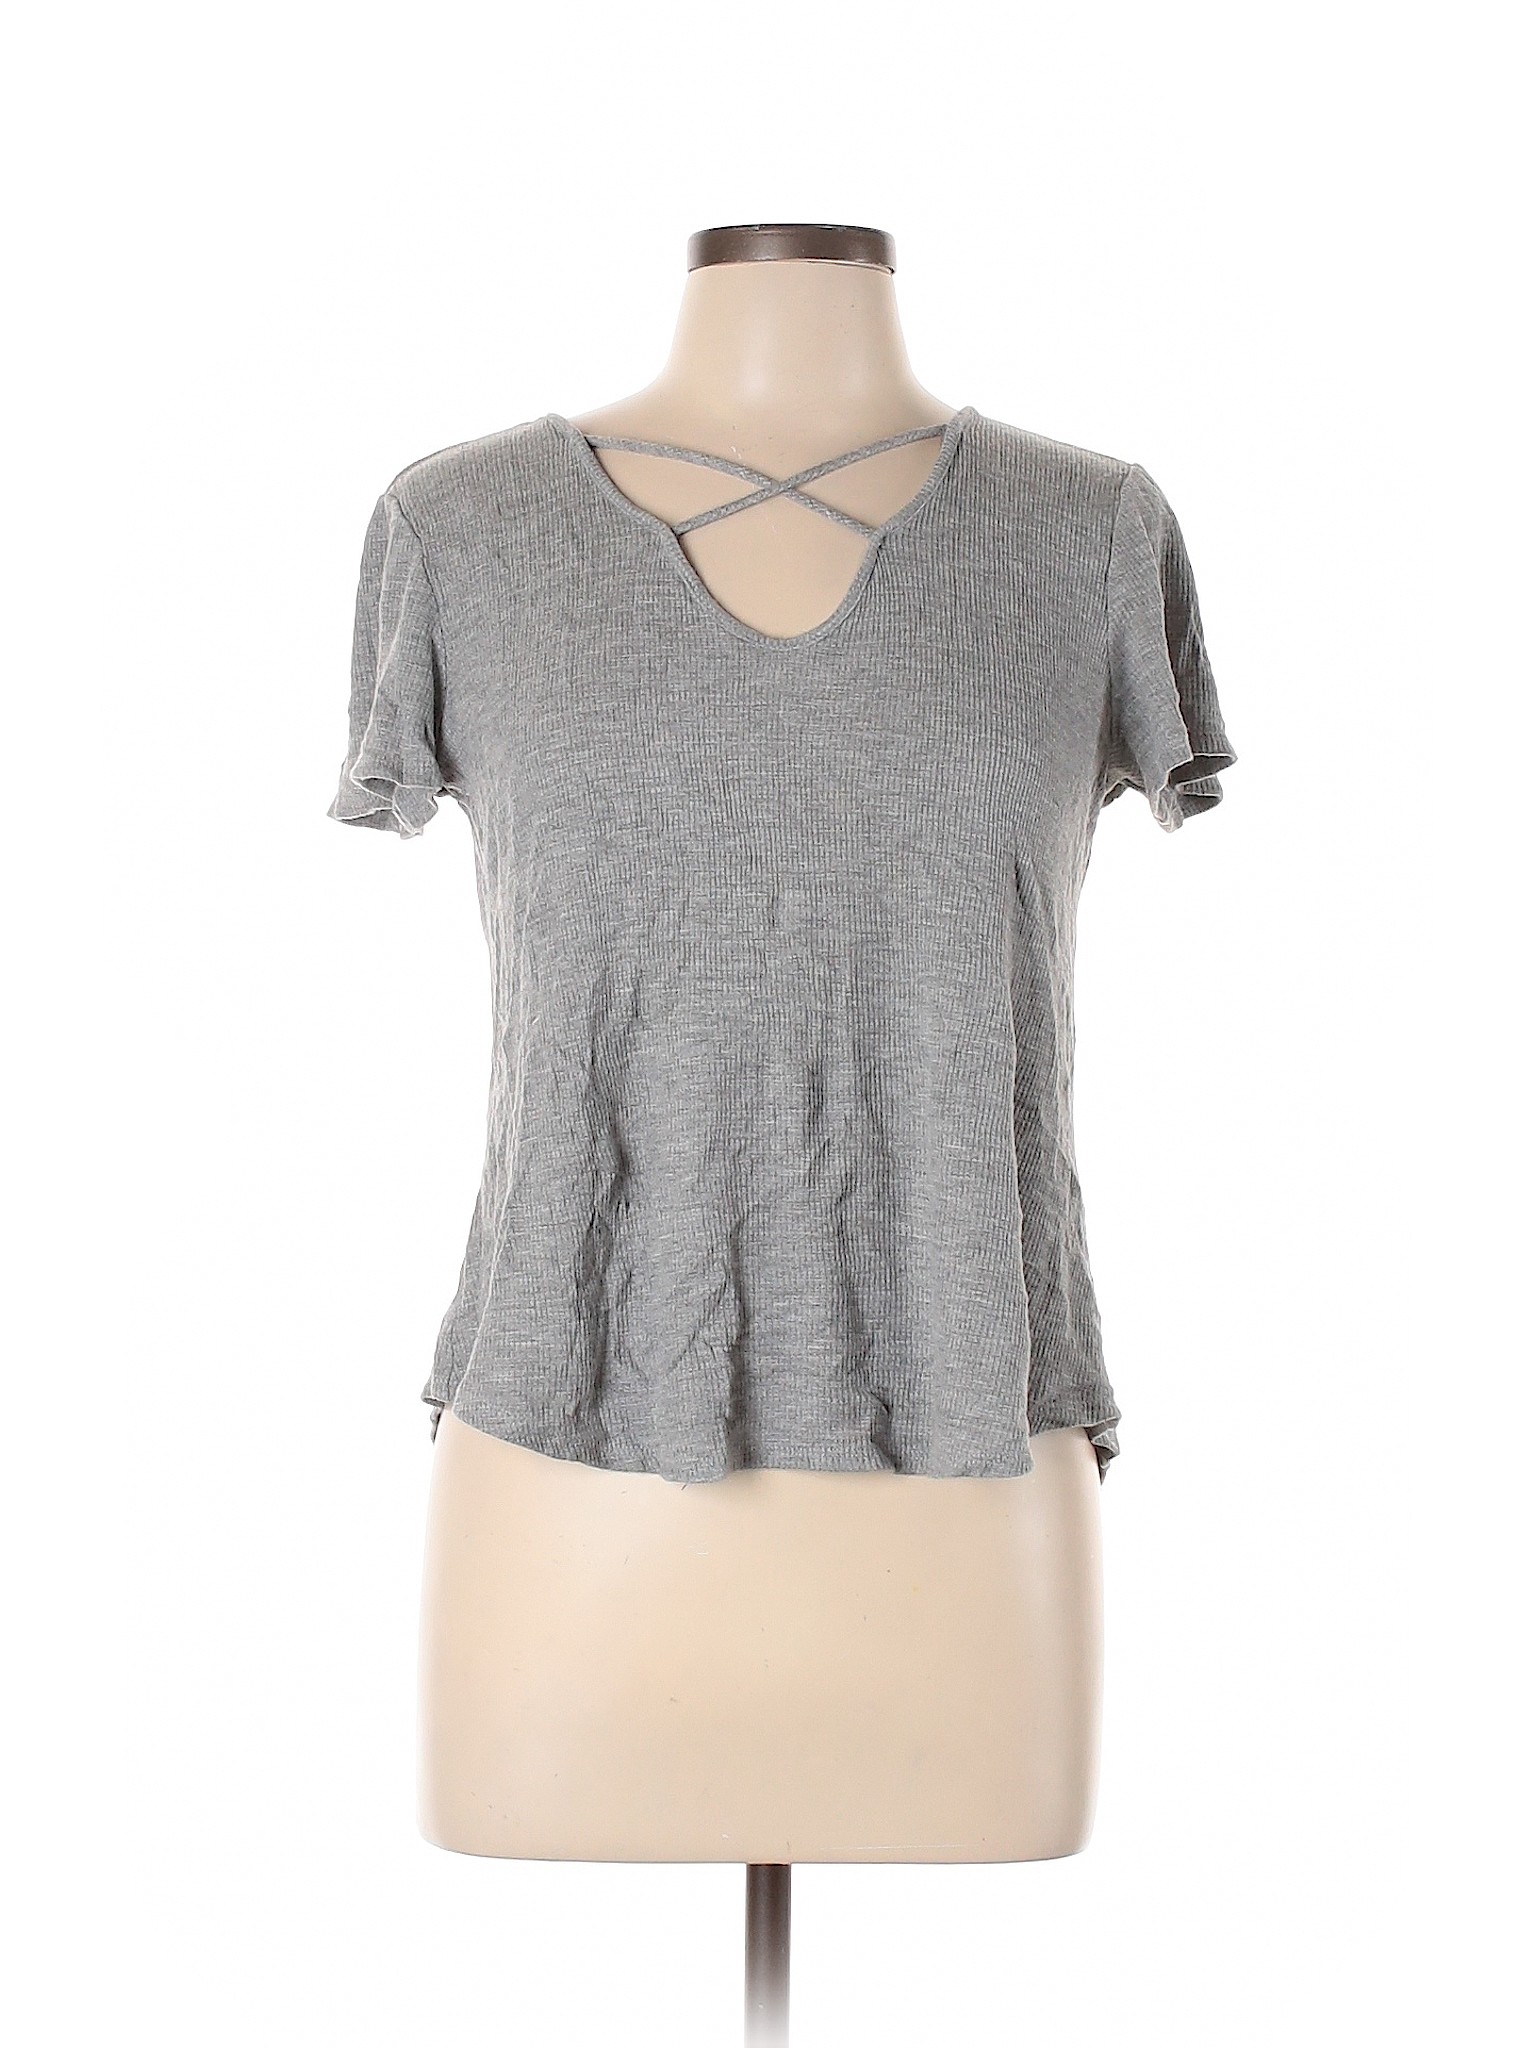 Filly Flair Women Gray Short Sleeve Top L | eBay